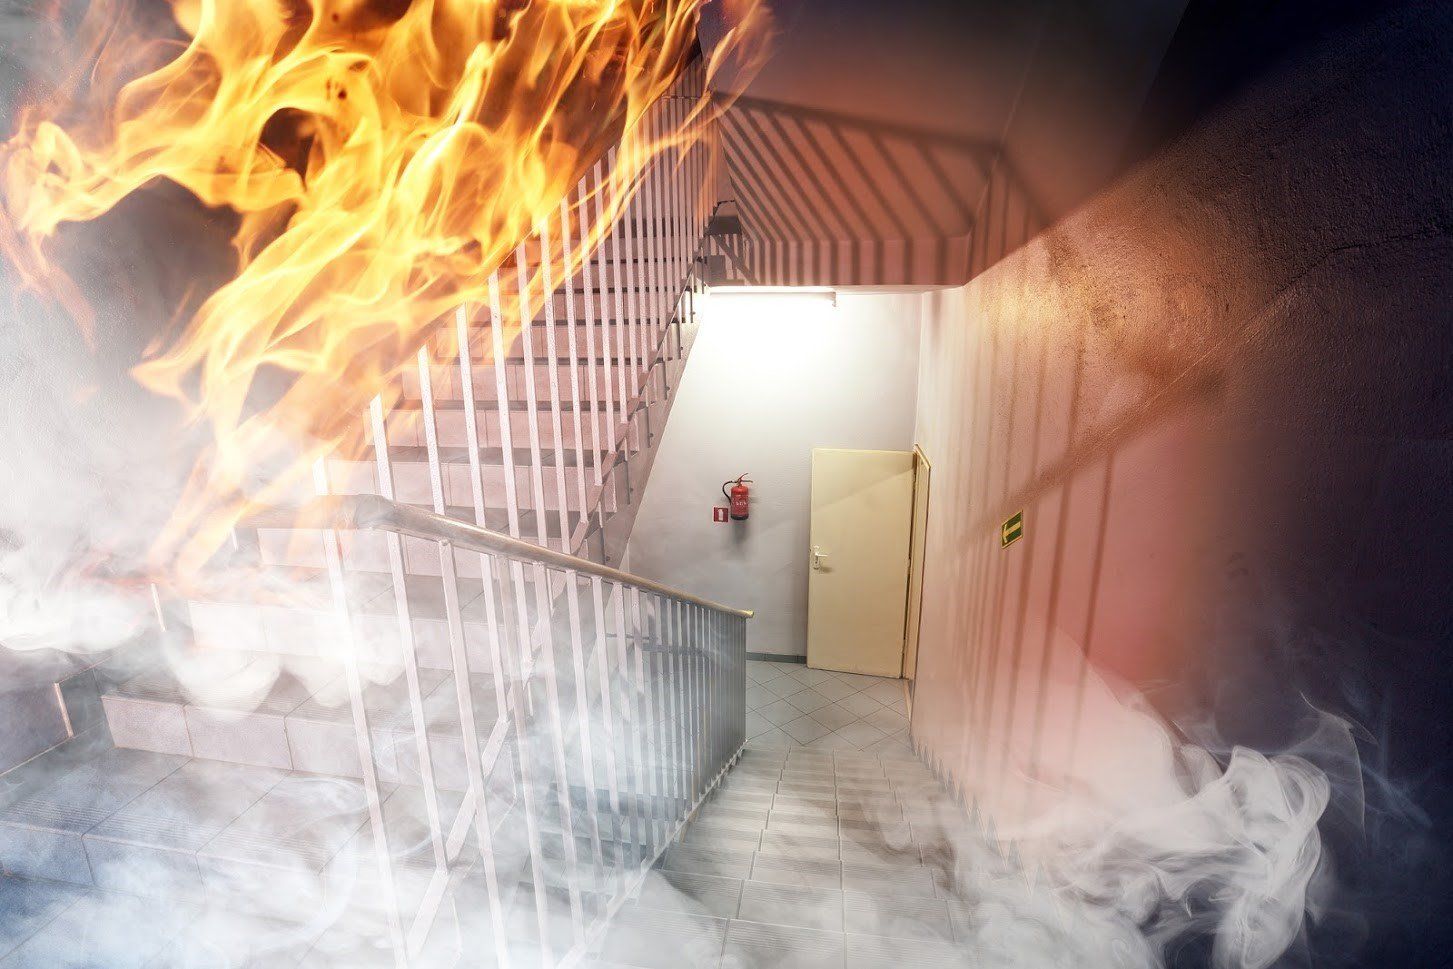 Emergency Response — Emergency Exit on Fire in Harrisburg, PA